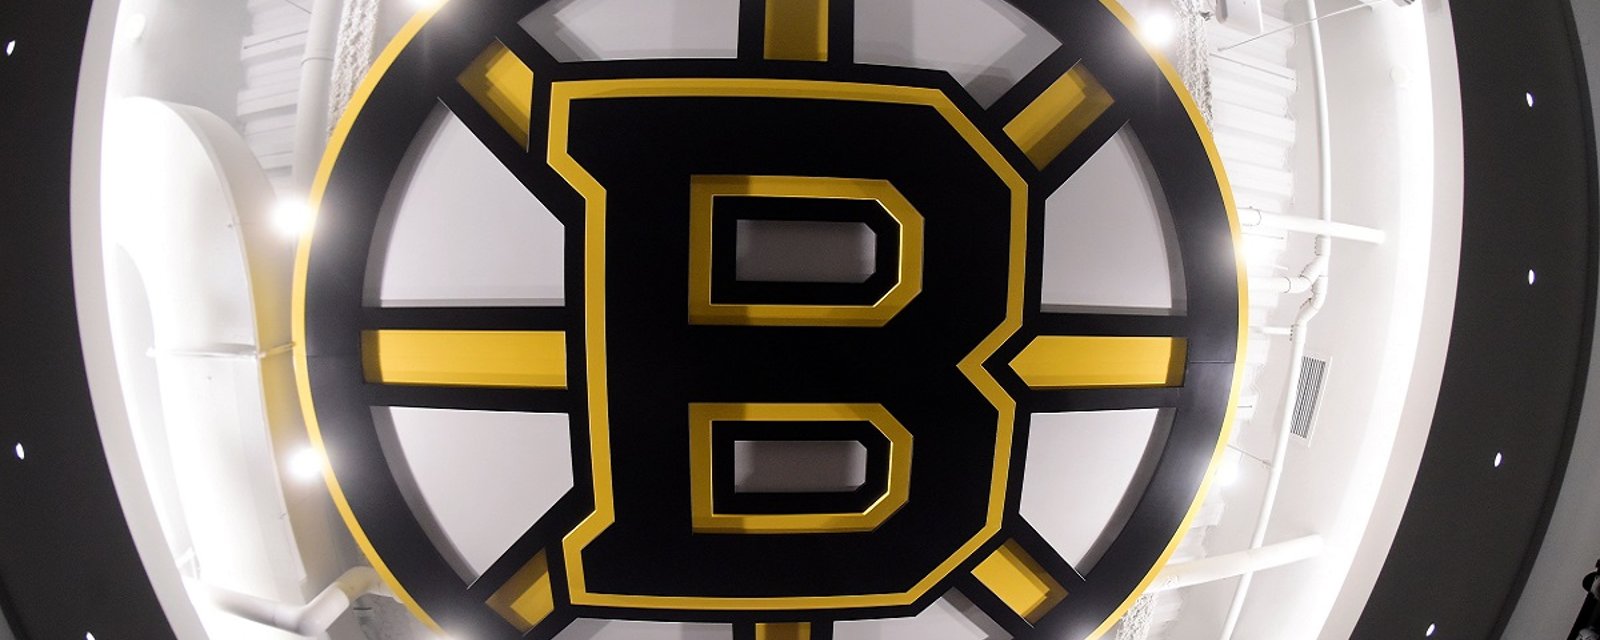 Bruins have reportedly broken off trade talks due to overpriced demands.